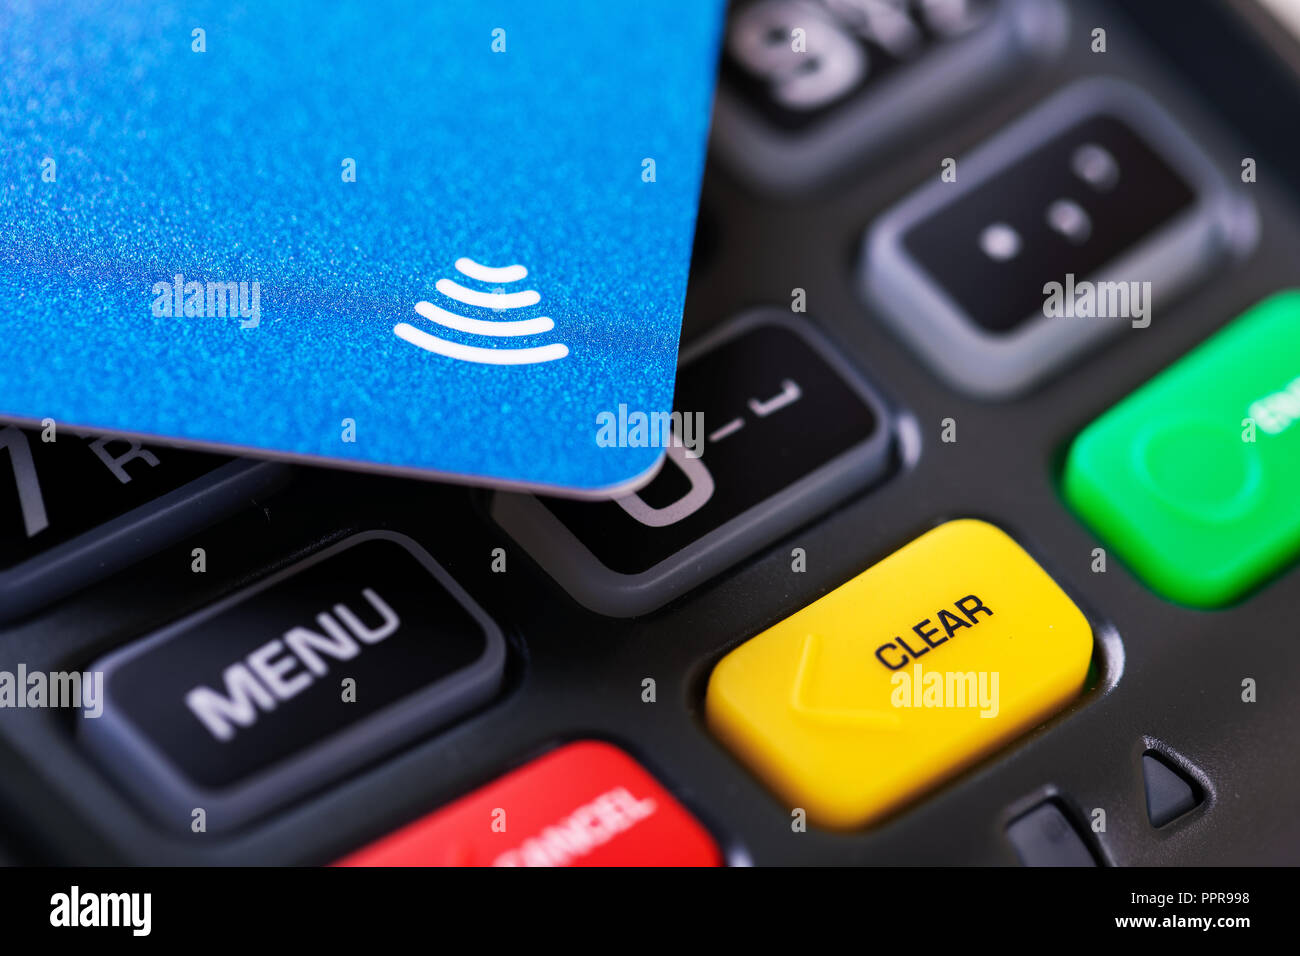 contactless payment - nfc credit card on transaction terminal Stock Photo